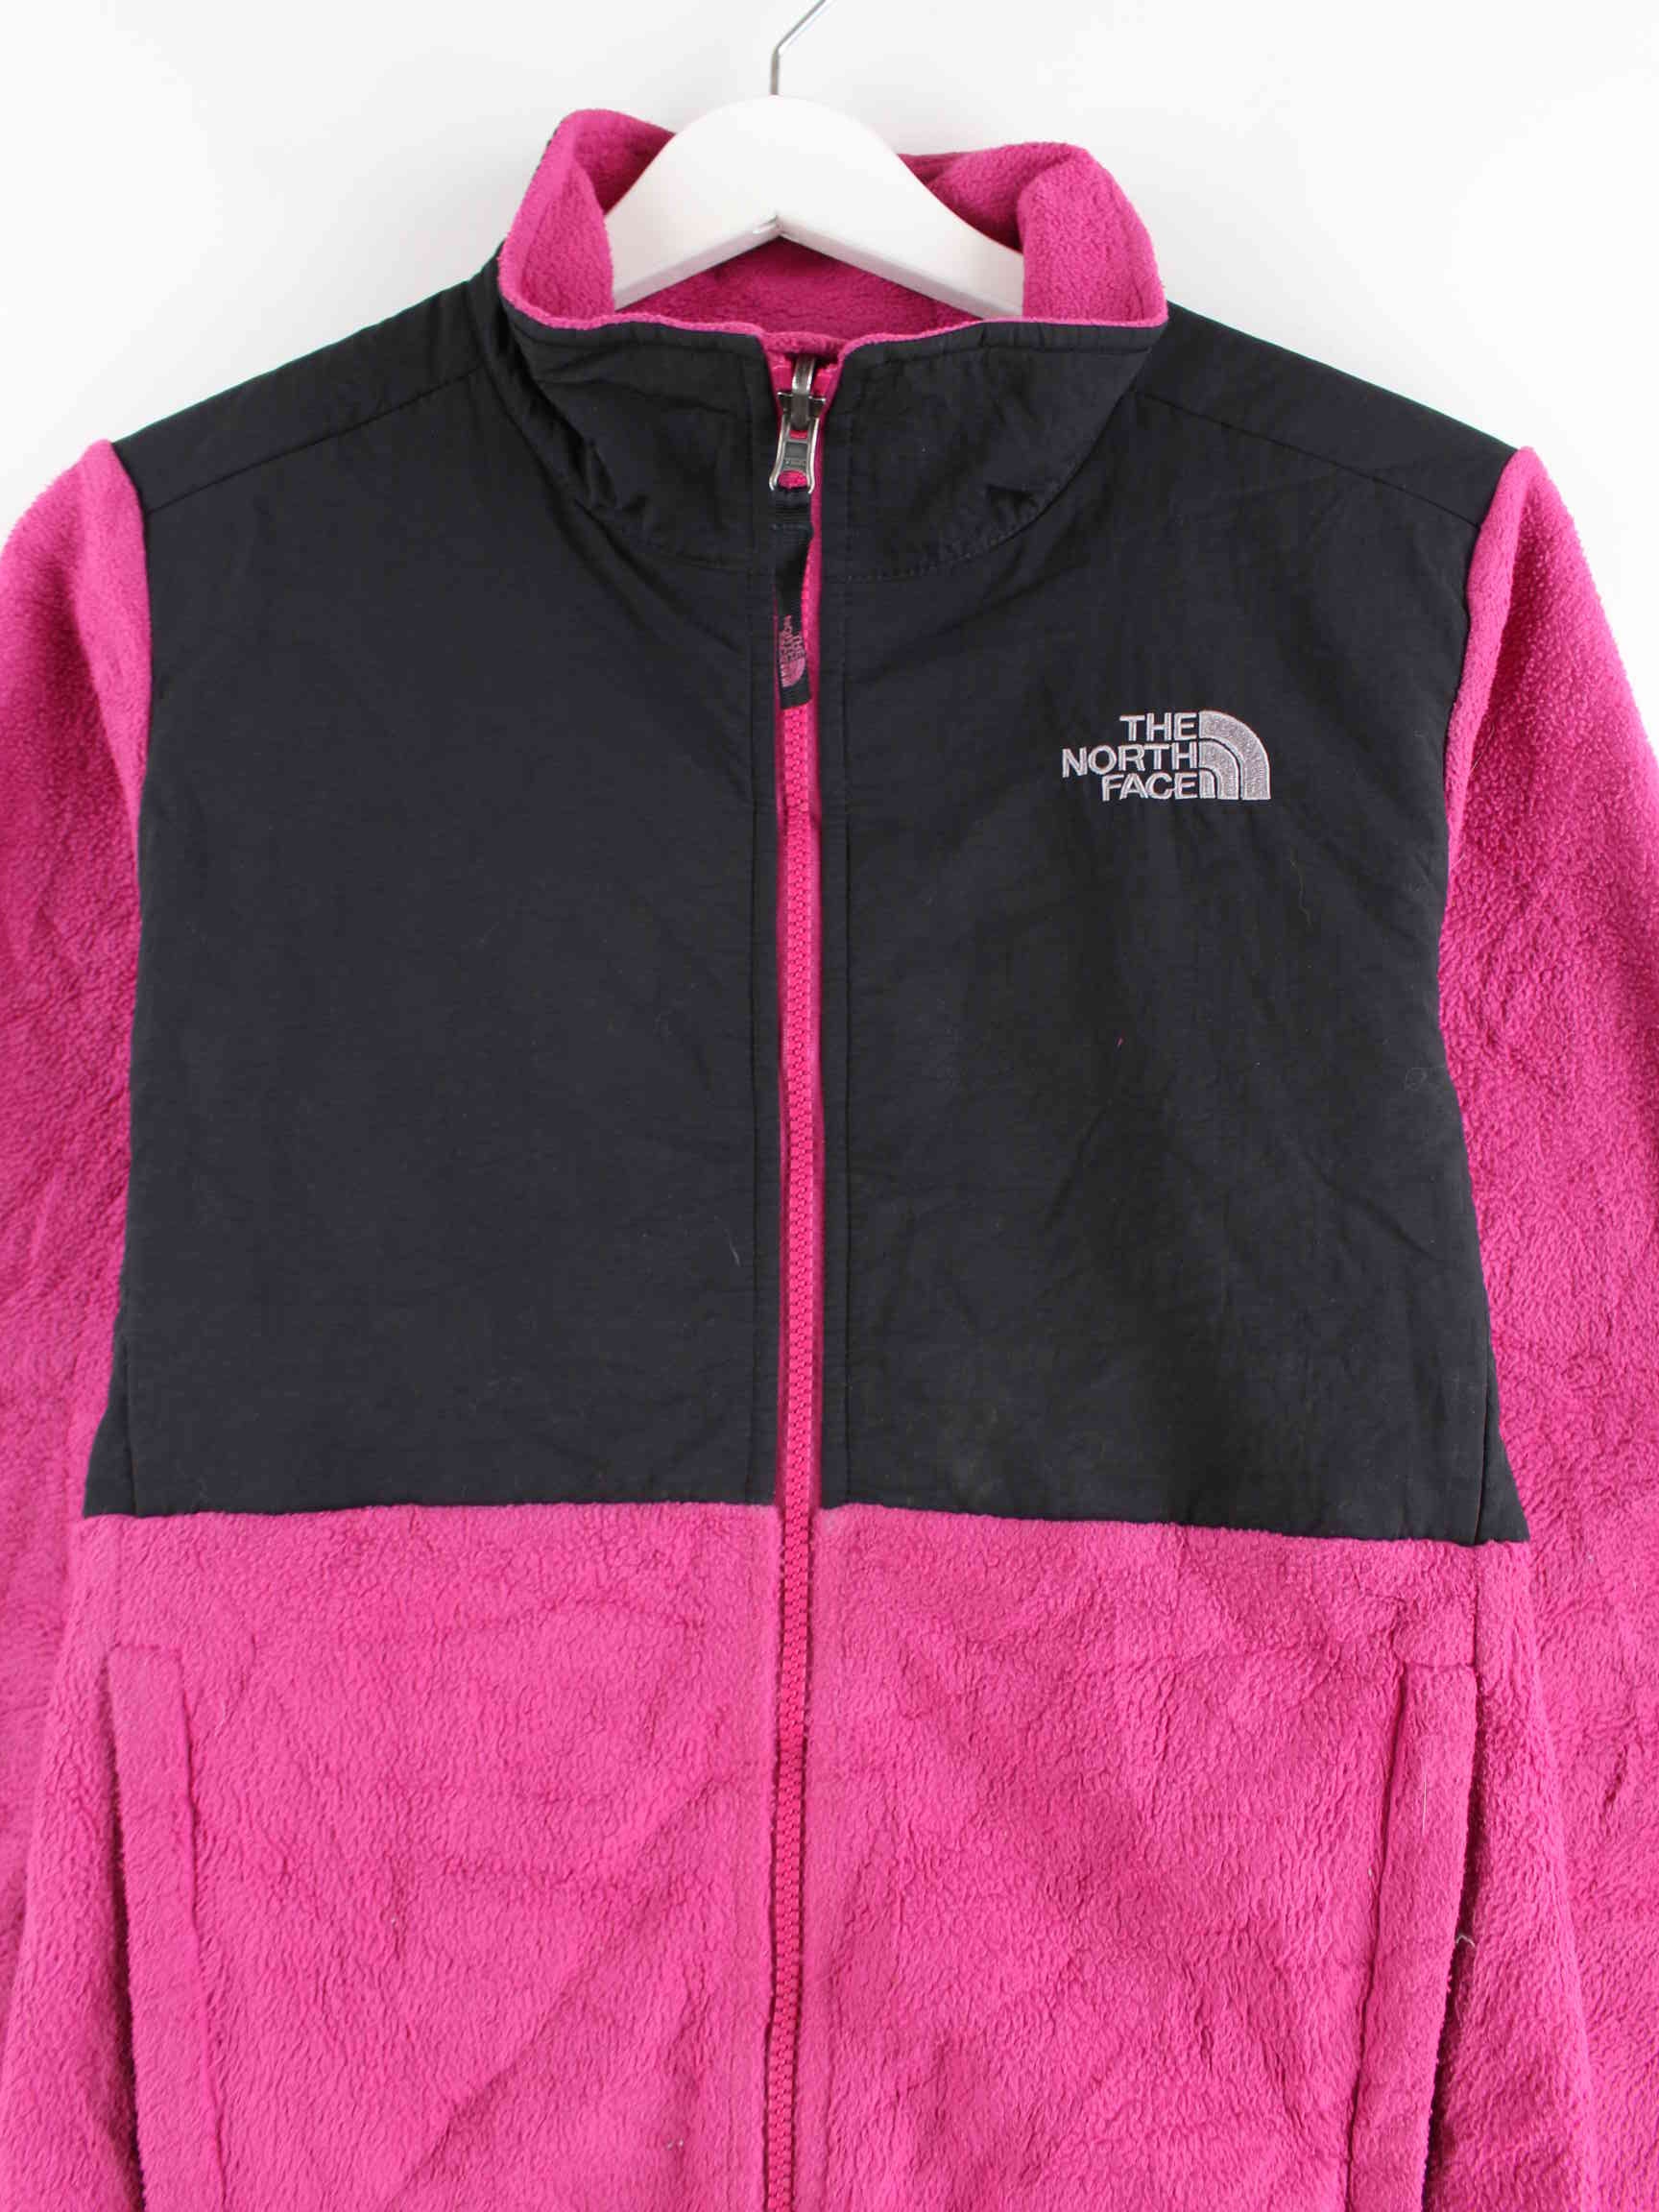 The North Face Damen Tech-Fleece Sweatjacke Pink S (detail image 1)